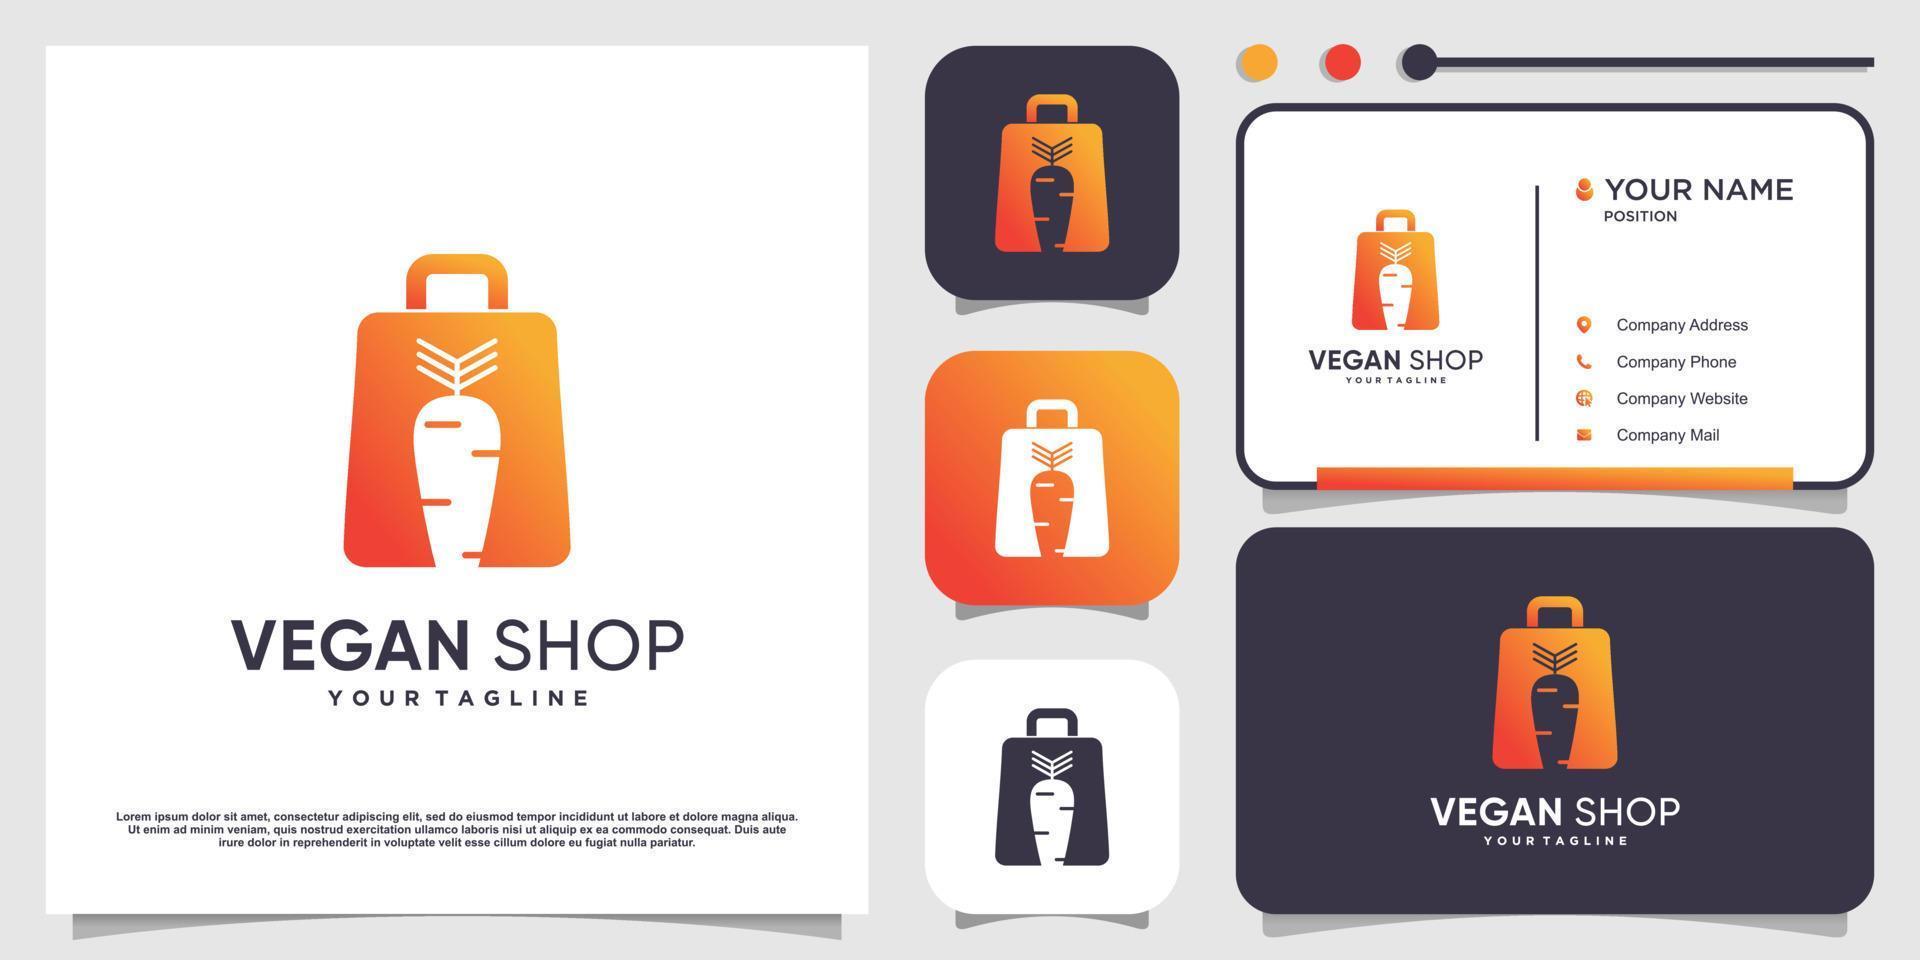 Vegan shop logo with creative element concept Premium Vector